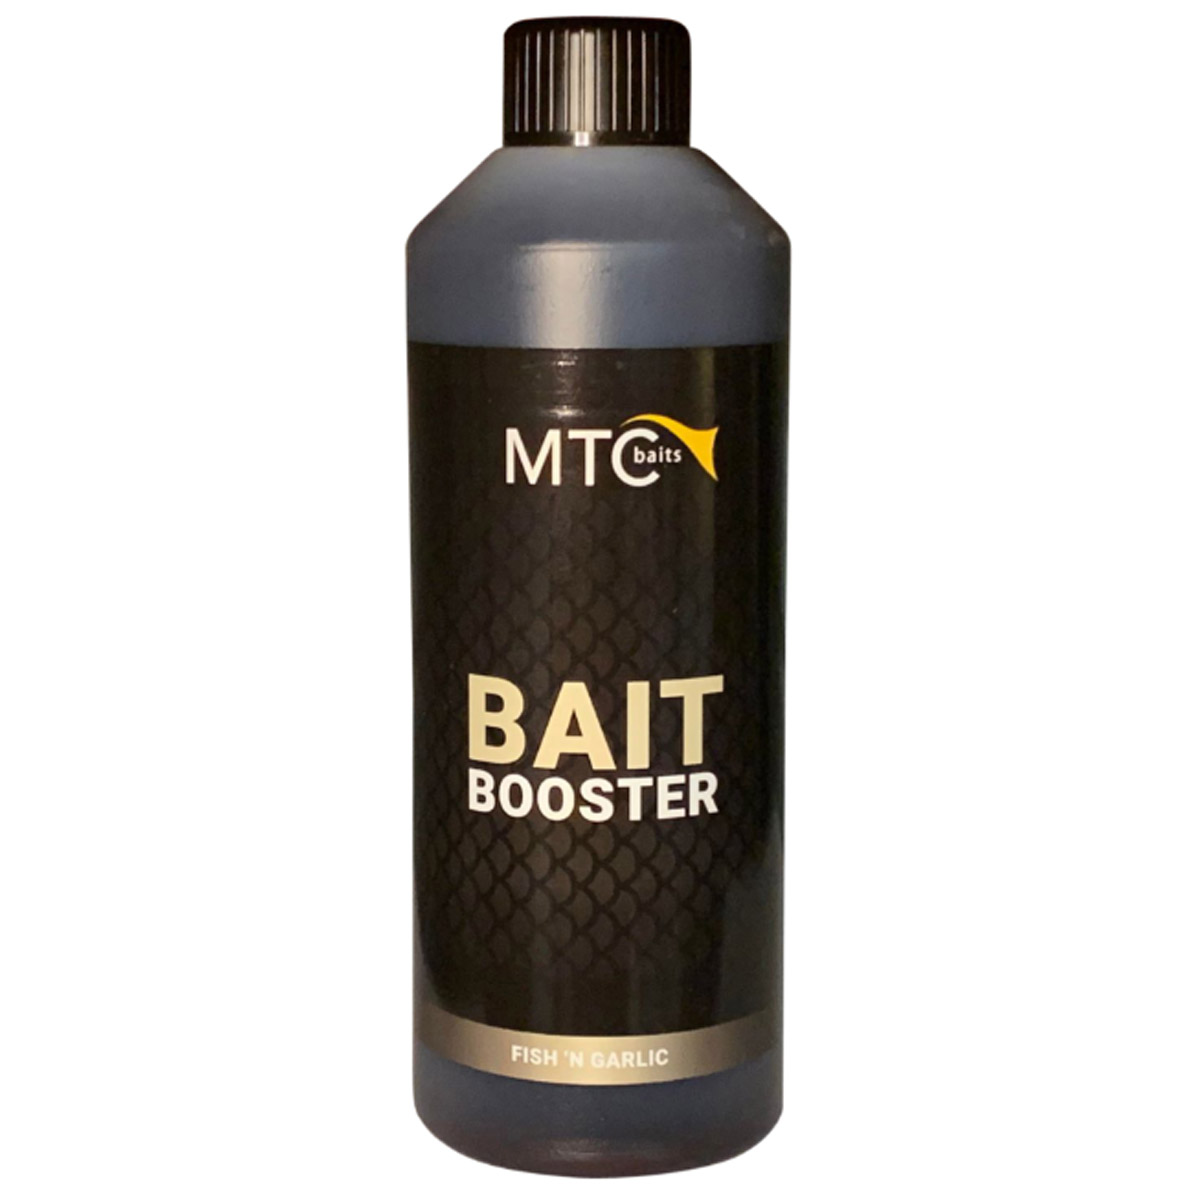 MTC Baits Bait Booster Fish 'n Garlic